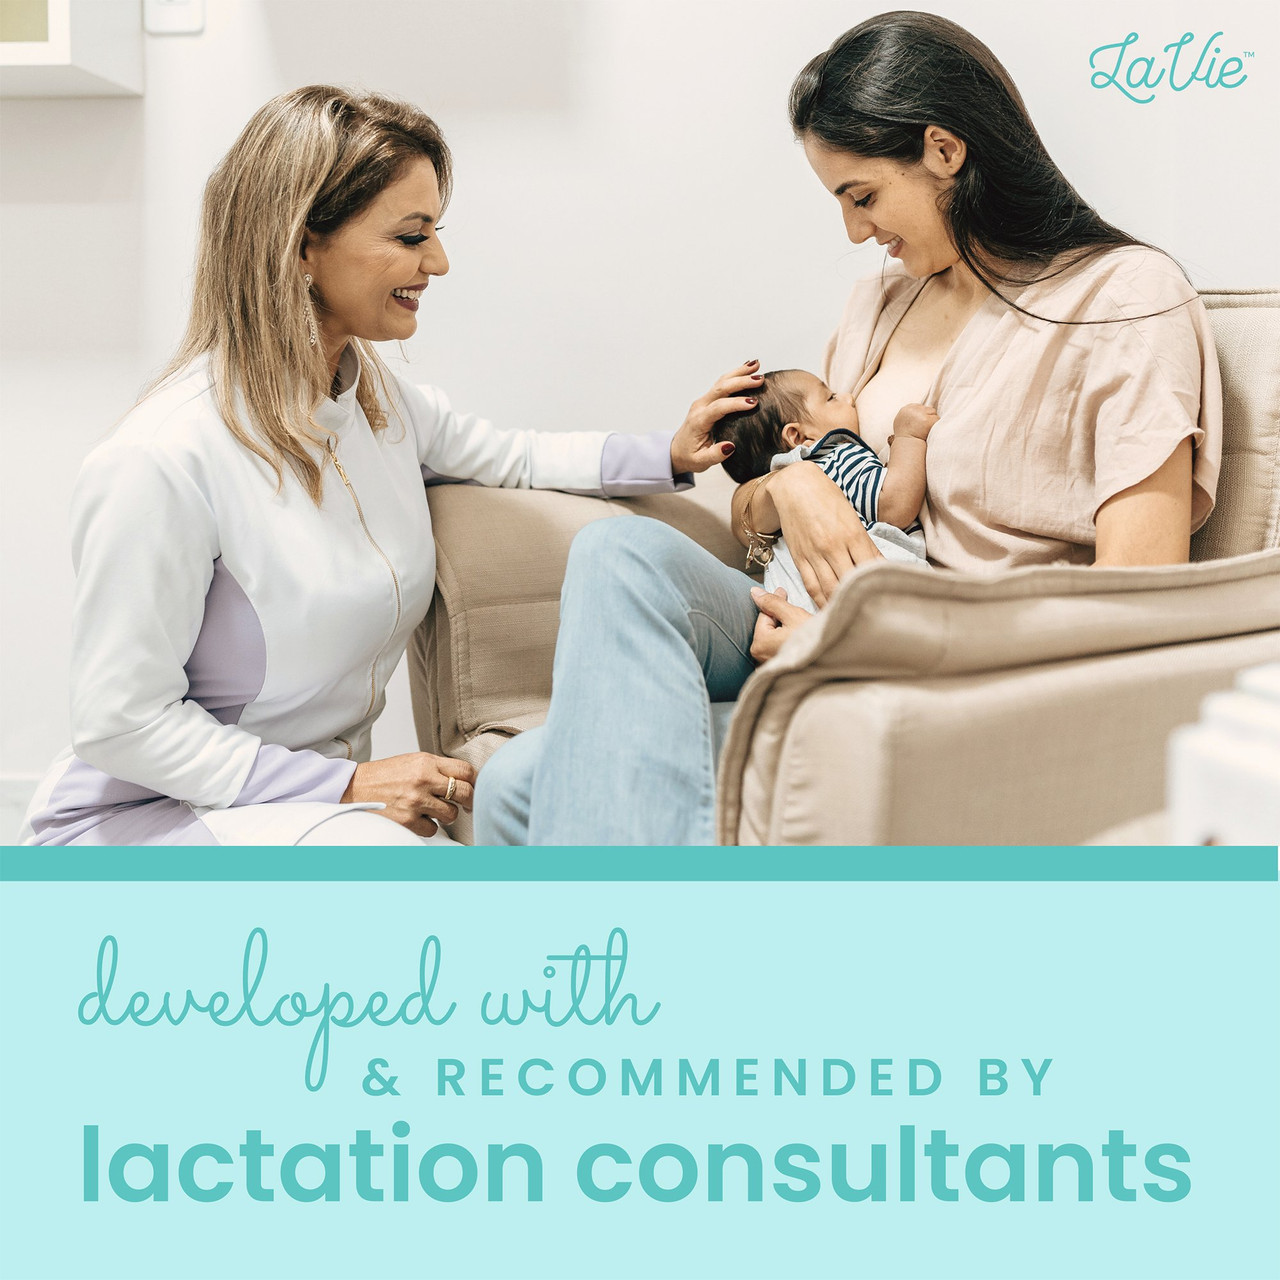 Lactation Massager Breastfeeding Stimulator Massage Postpartum